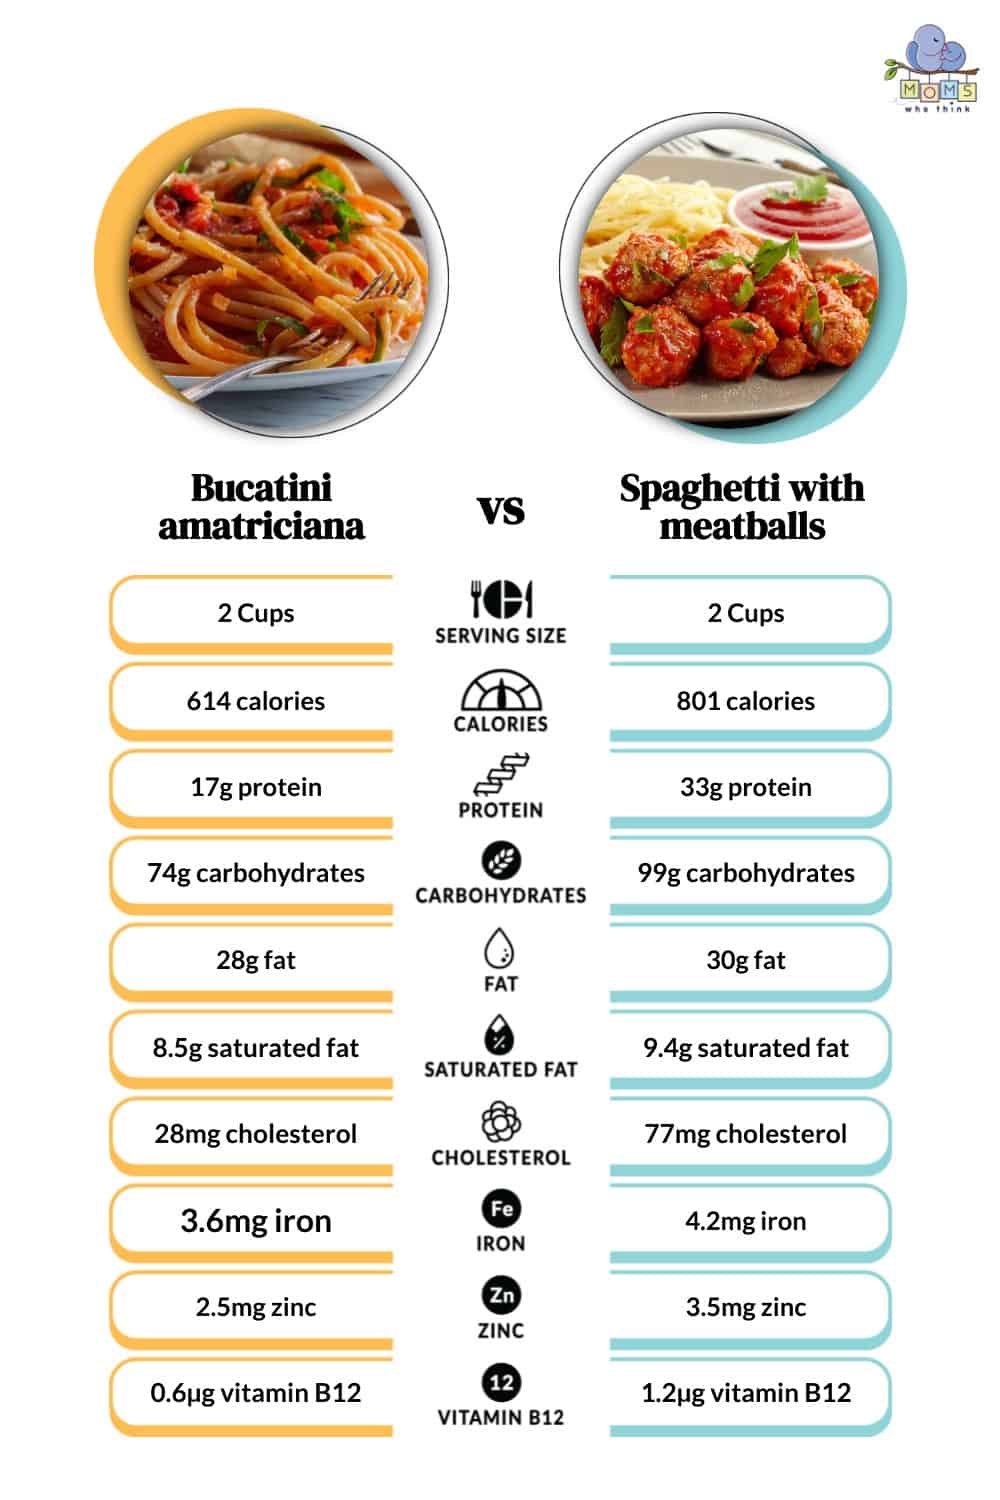 Bucatini amatriciana vs Spaghetti with meatballs Nutritional Comparison 